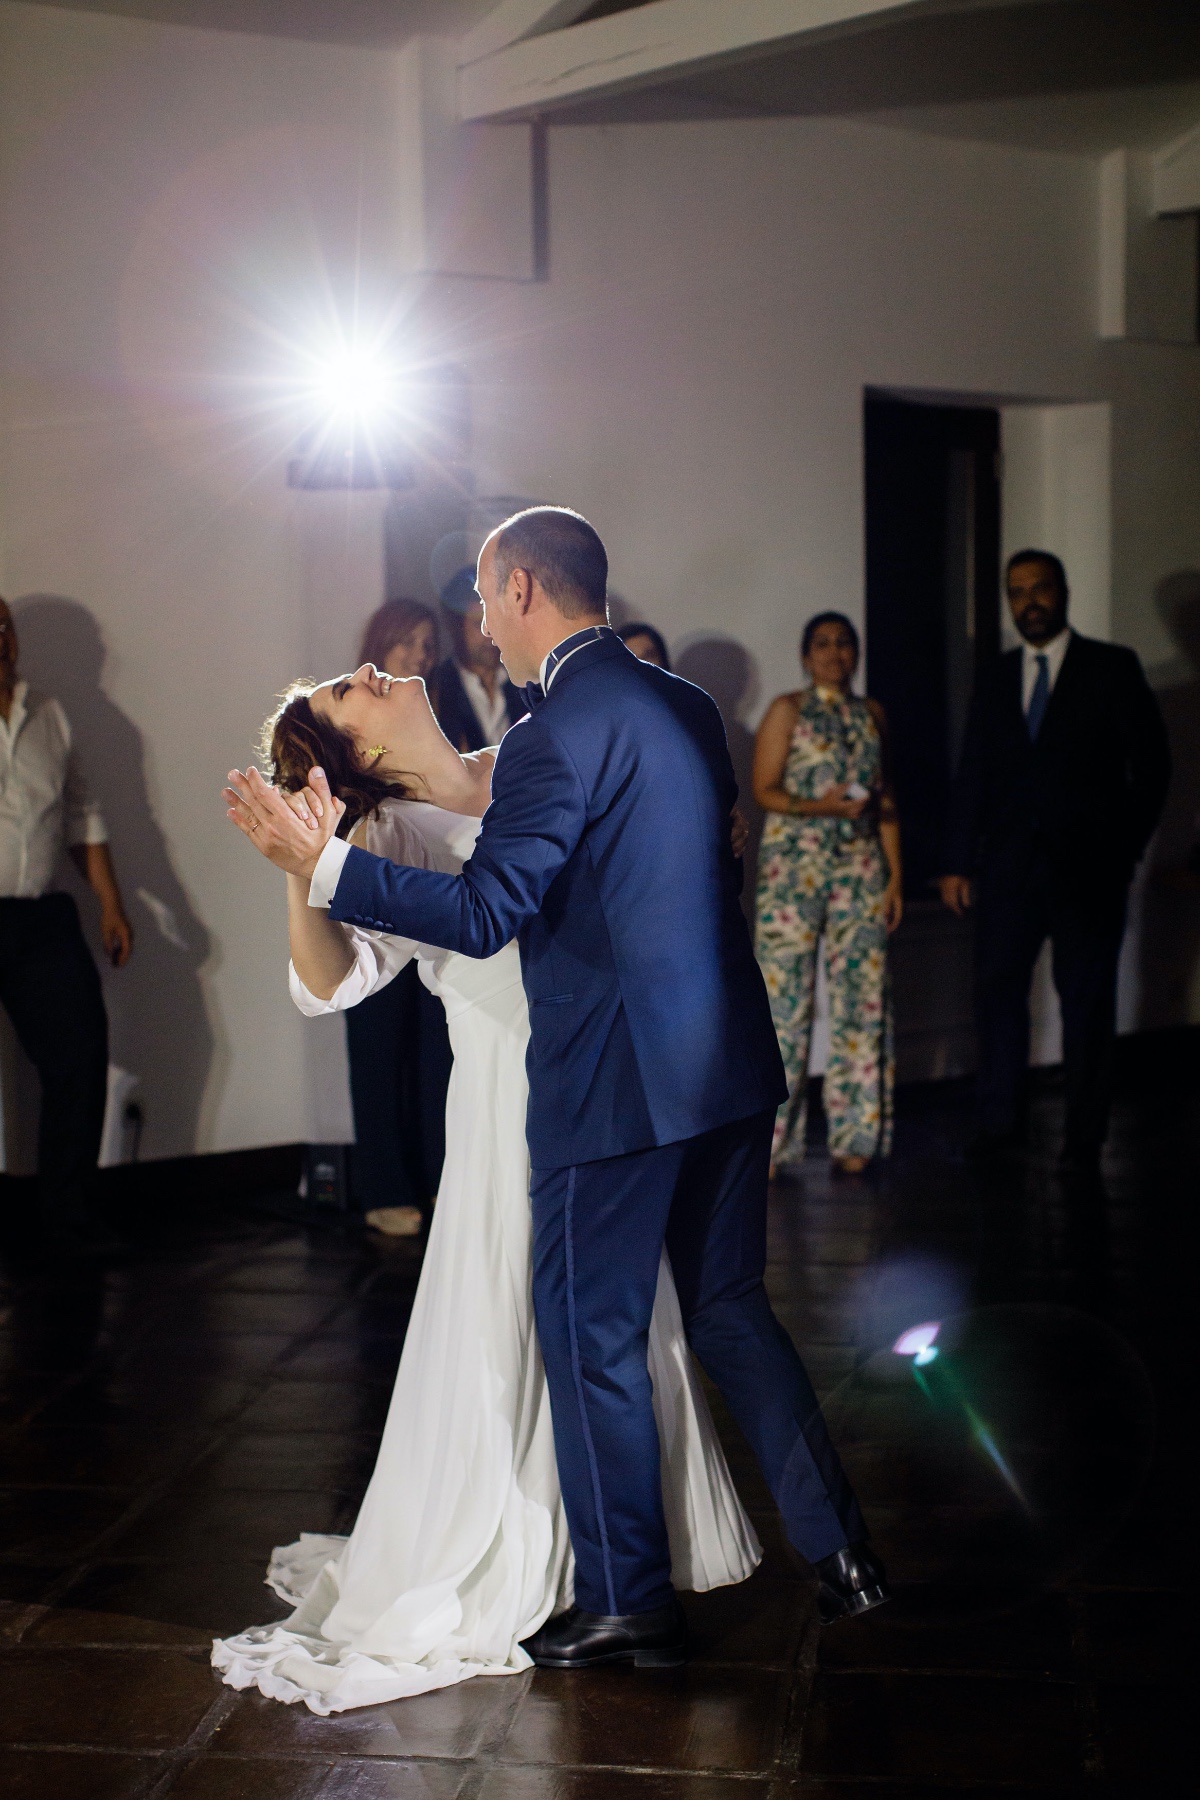 wedding dancing photography idea